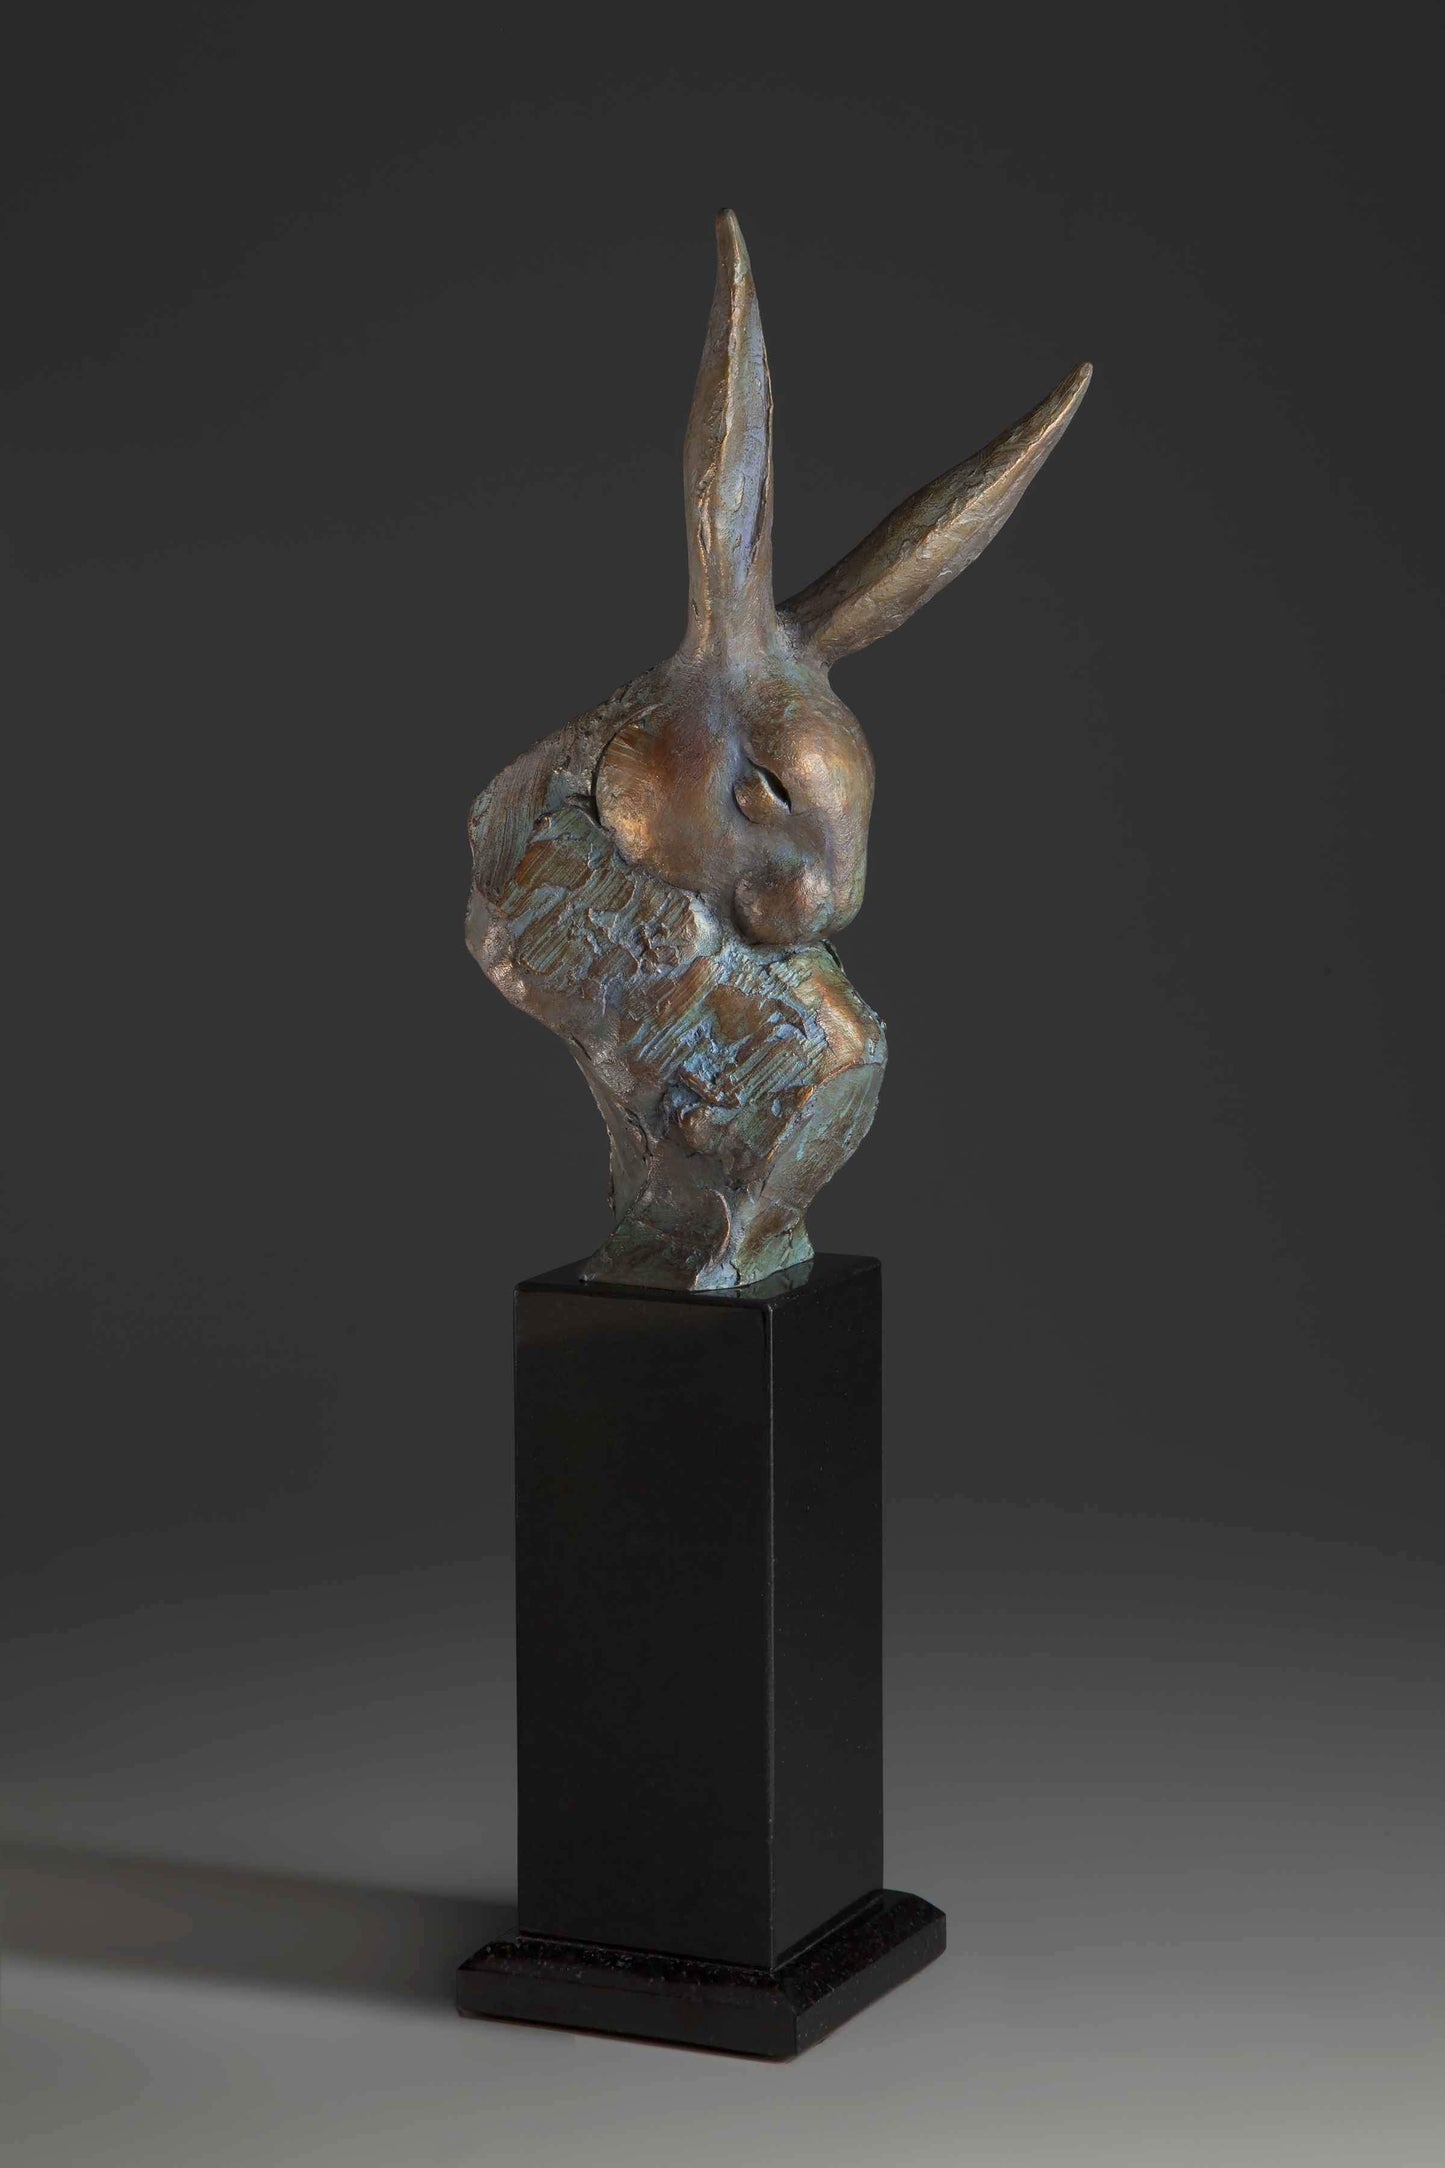 A Rabbit bust on a black pedestal. Sculpture Bronze by Tim Cherry. Sorrel Sky Gallery